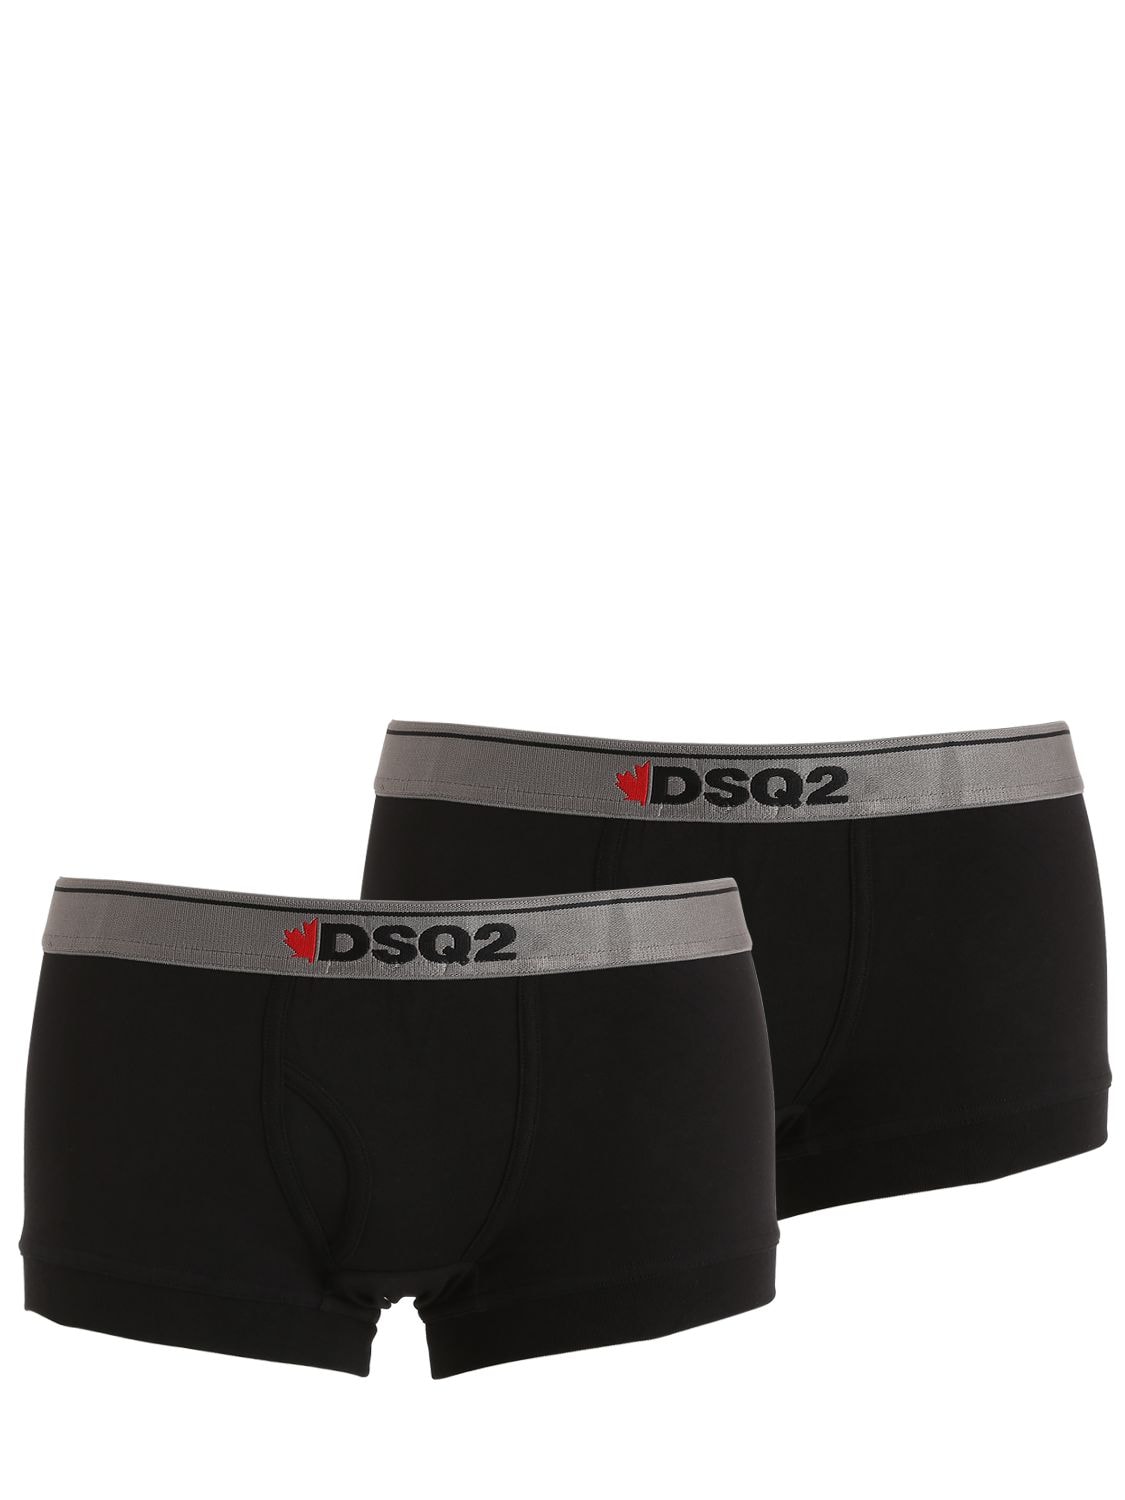 Dsquared2 Underwear Pack Of 2 Cotton Jersey Boxer Briefs In Black/grey